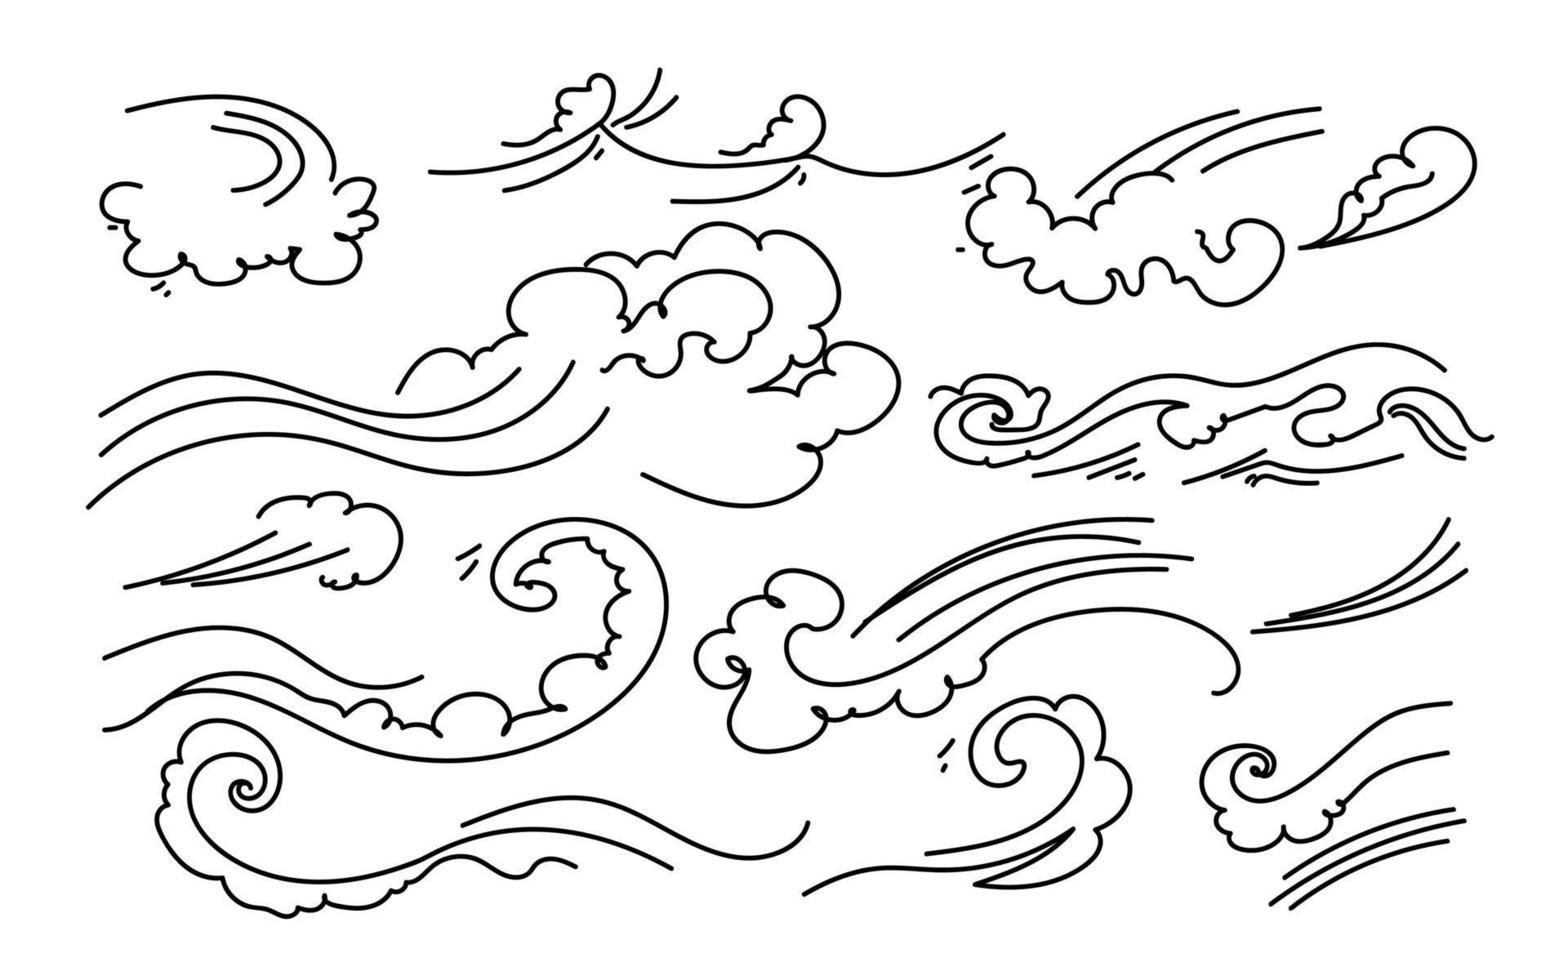 Tsunami waves background doodle sketch hand drawn vector. vector